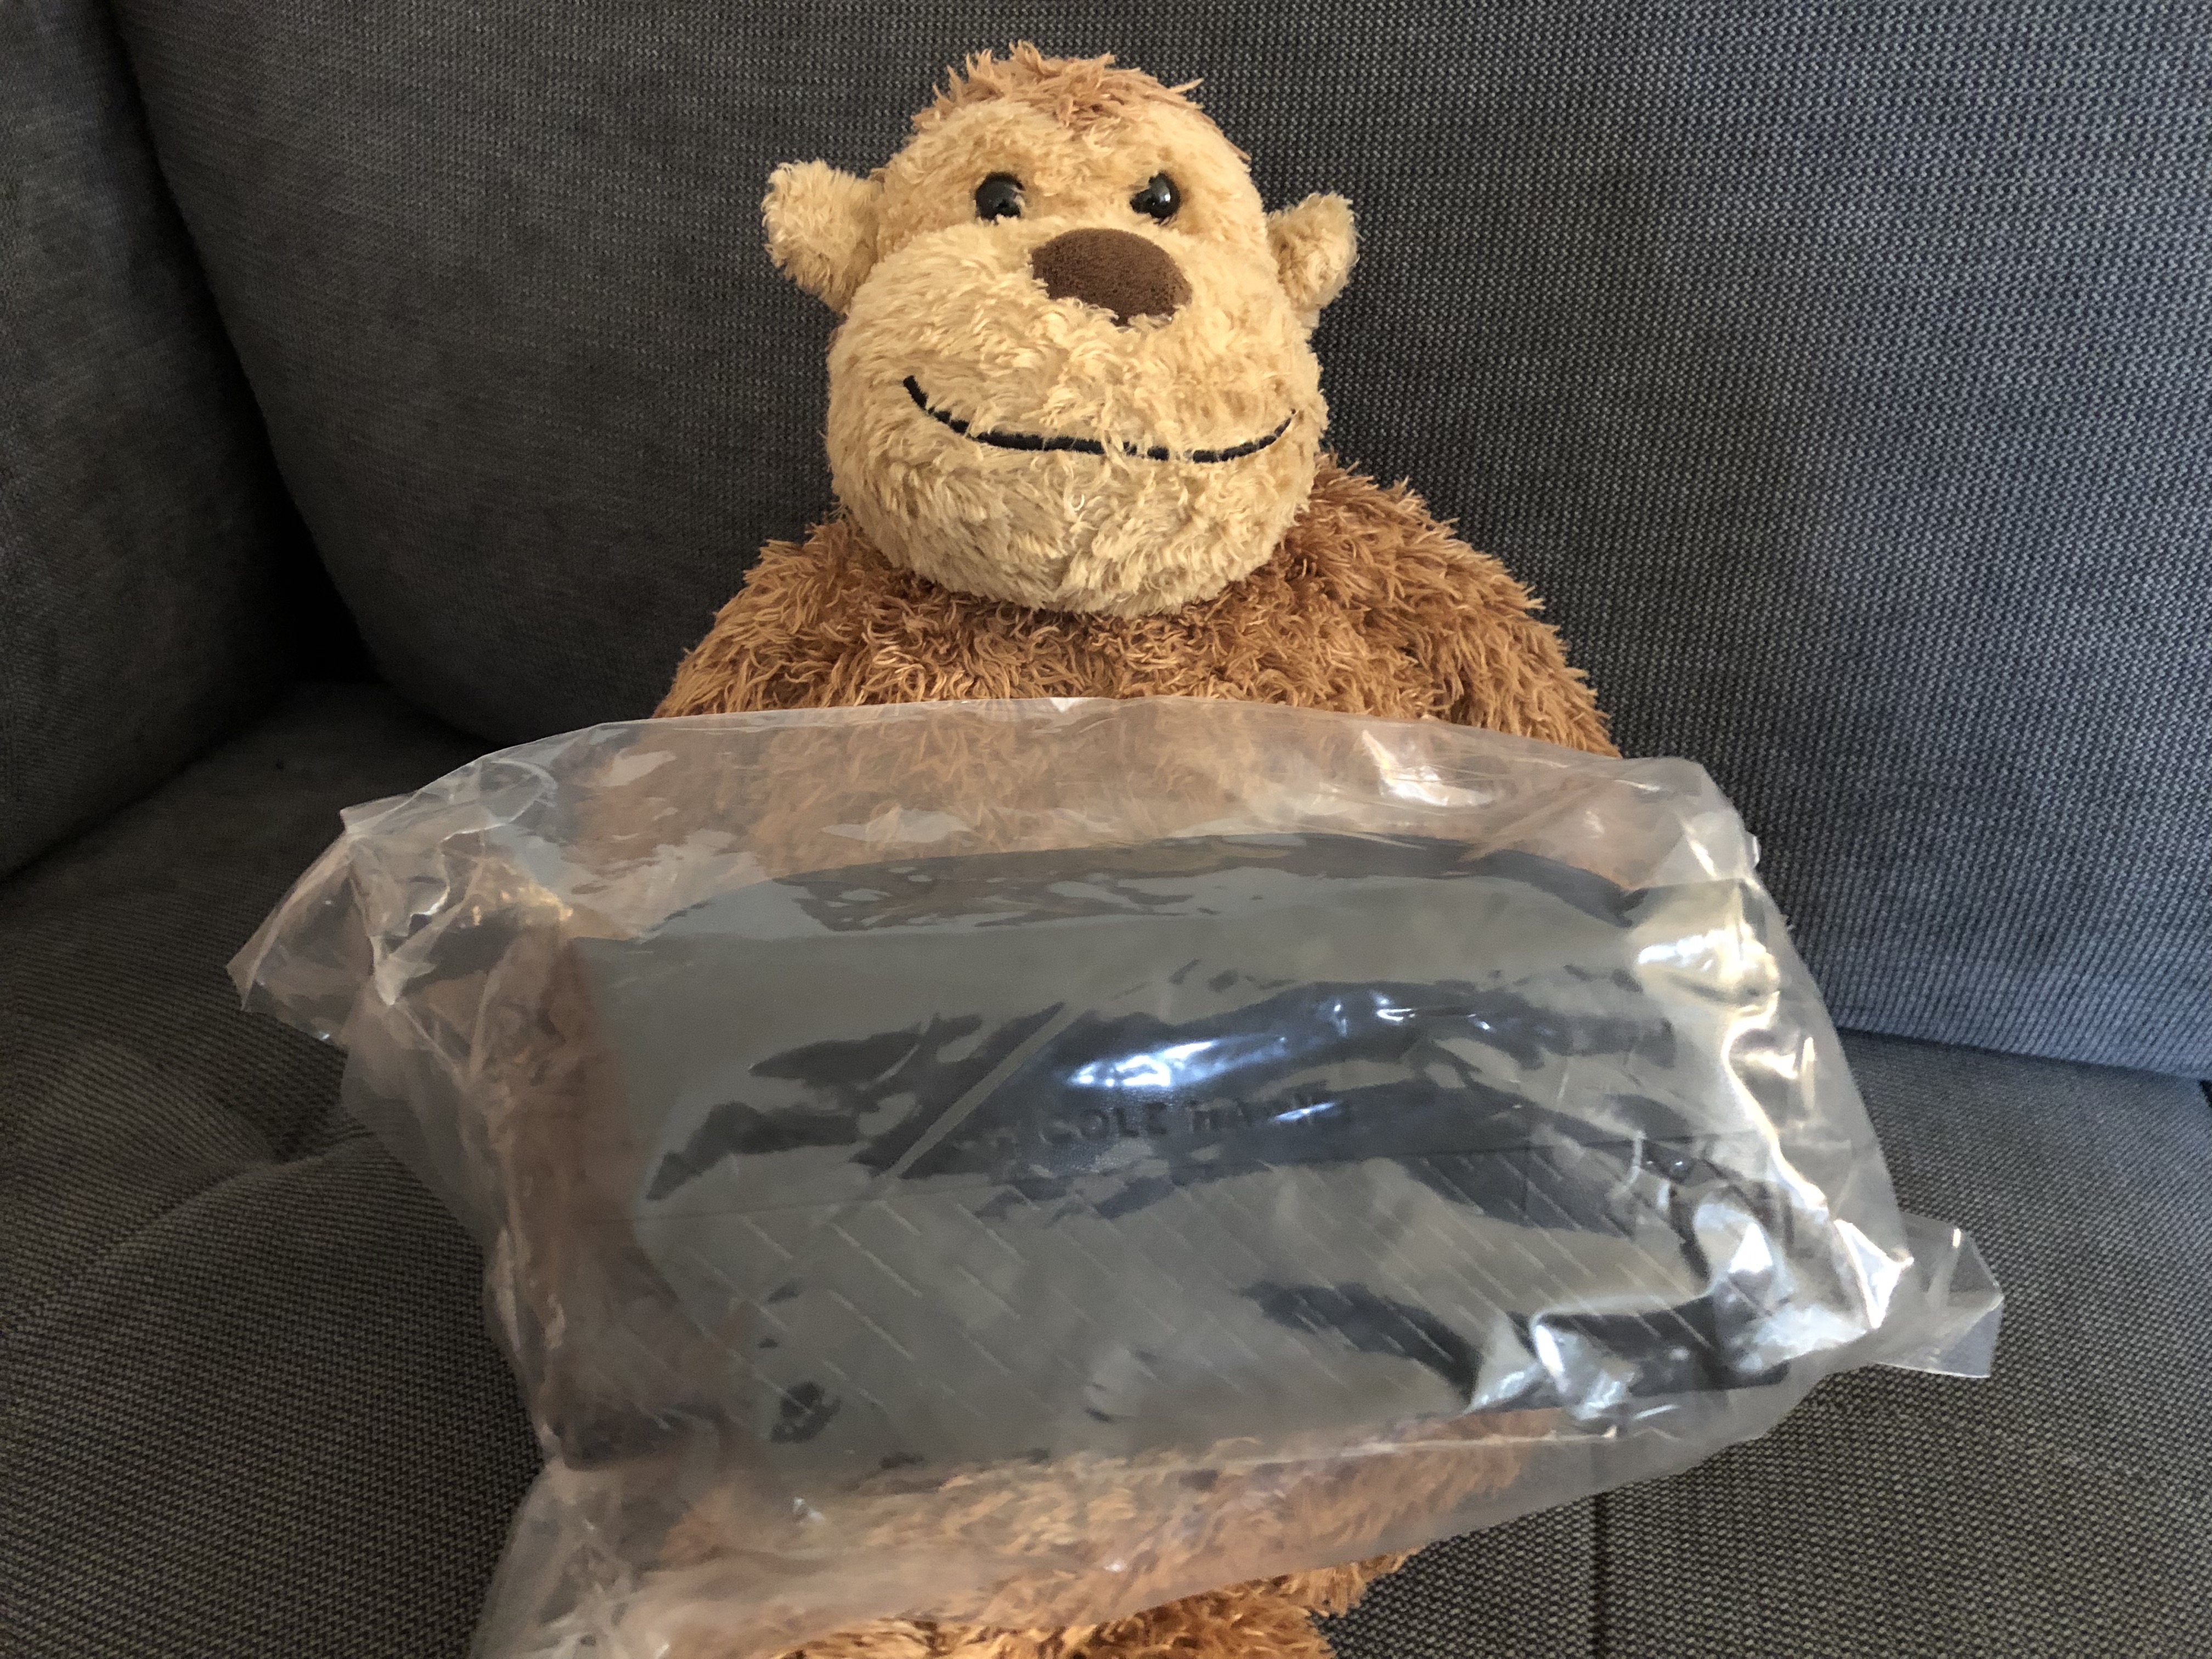 a stuffed animal in a plastic bag